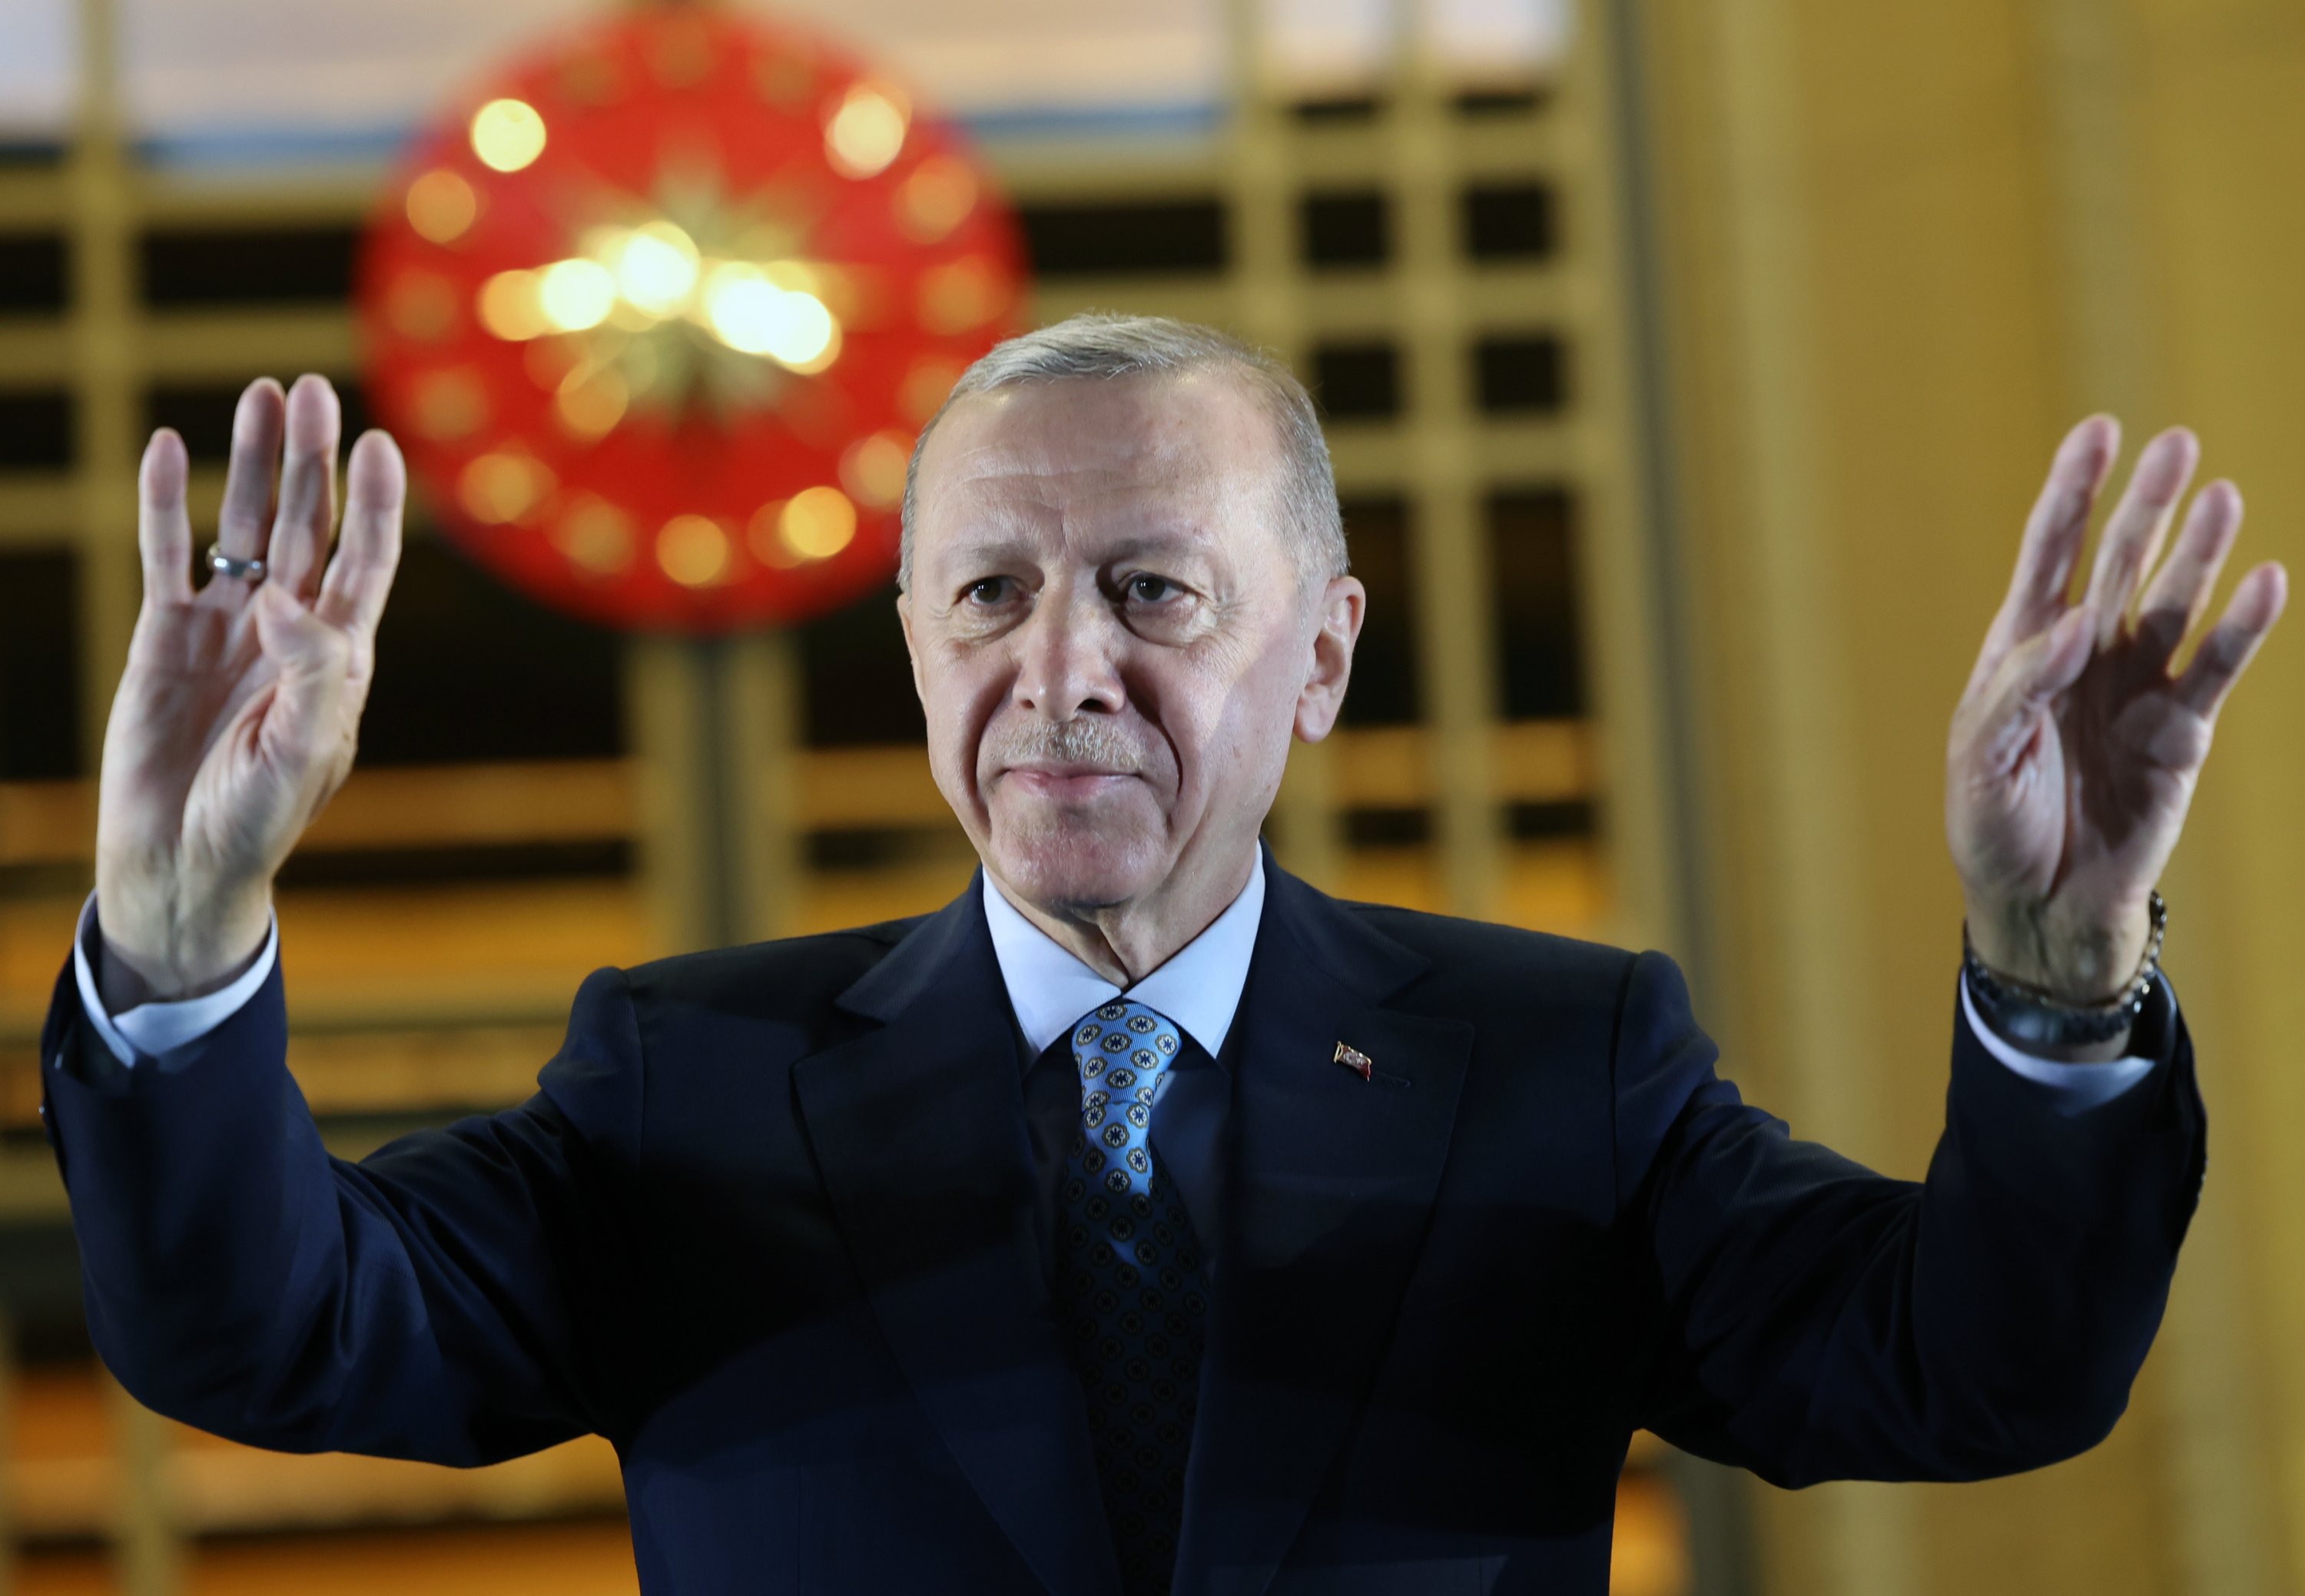 World congratulates Türkiye's Erdoğan after historic election win